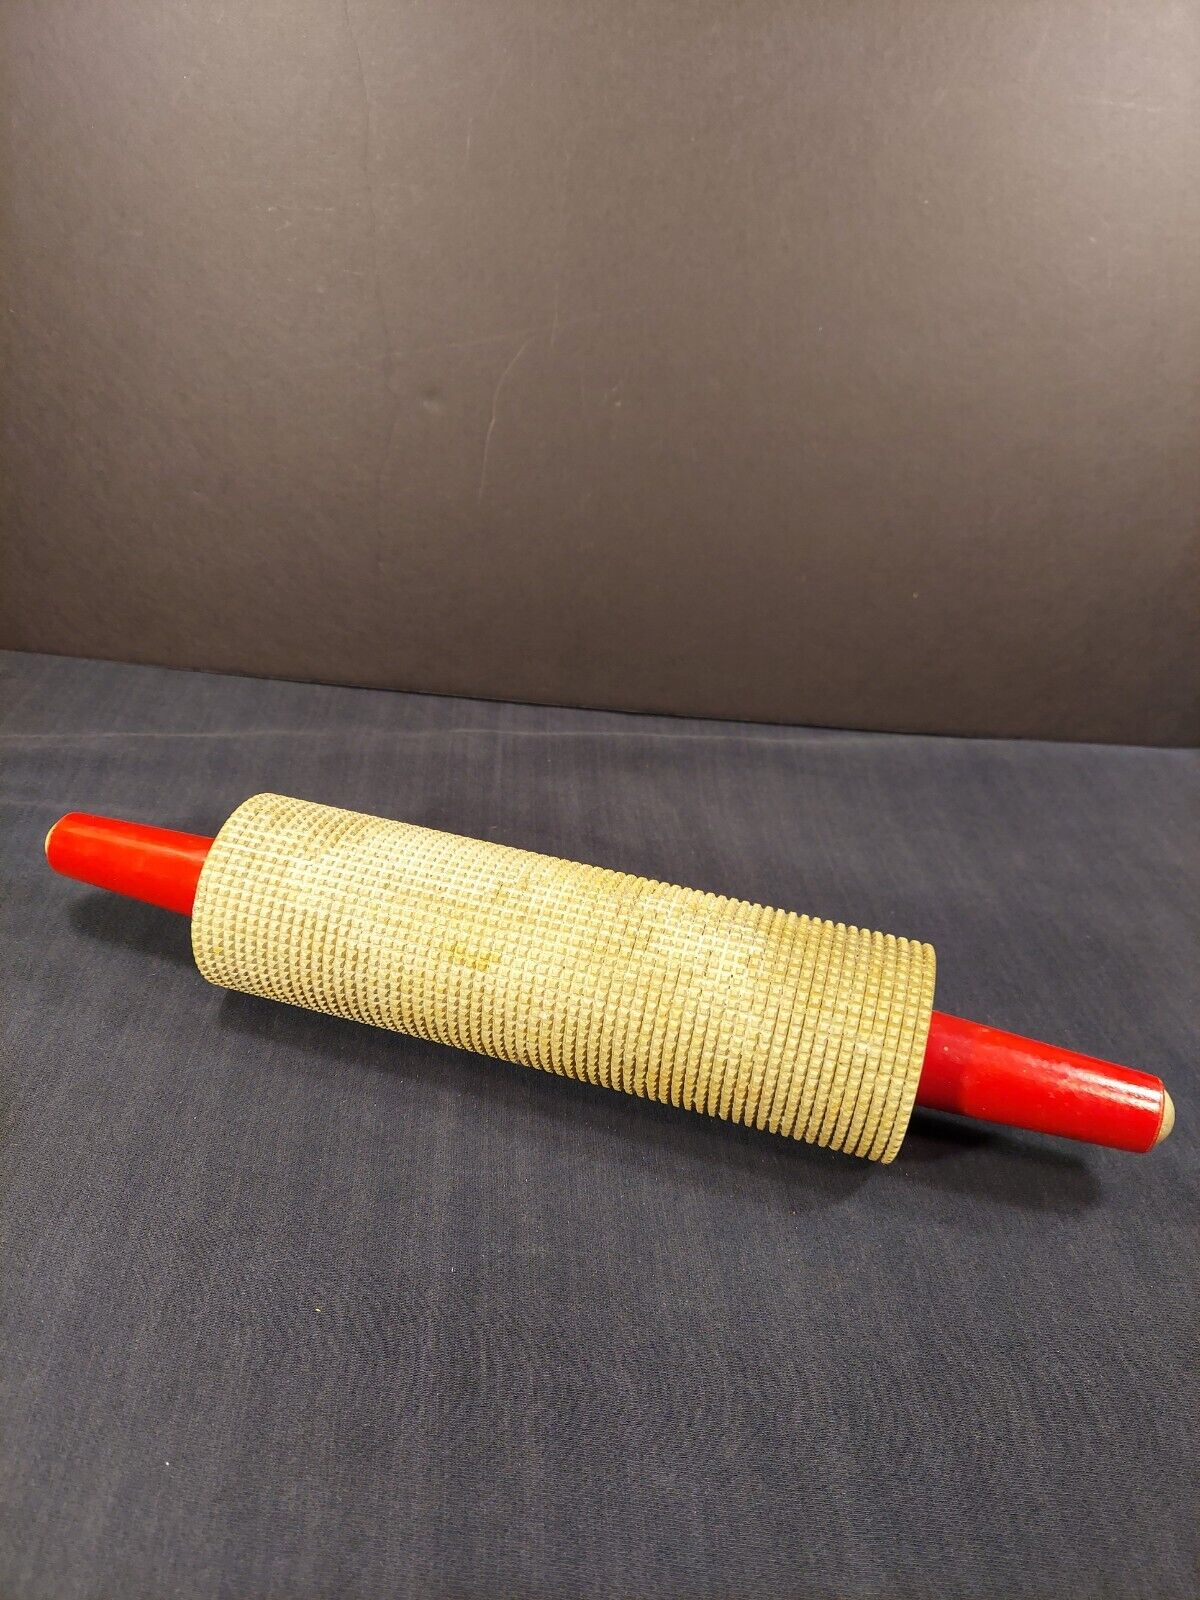 Vtg Lokstad Wood Rolling Pin Lefse Flatbread Textured Red Handles